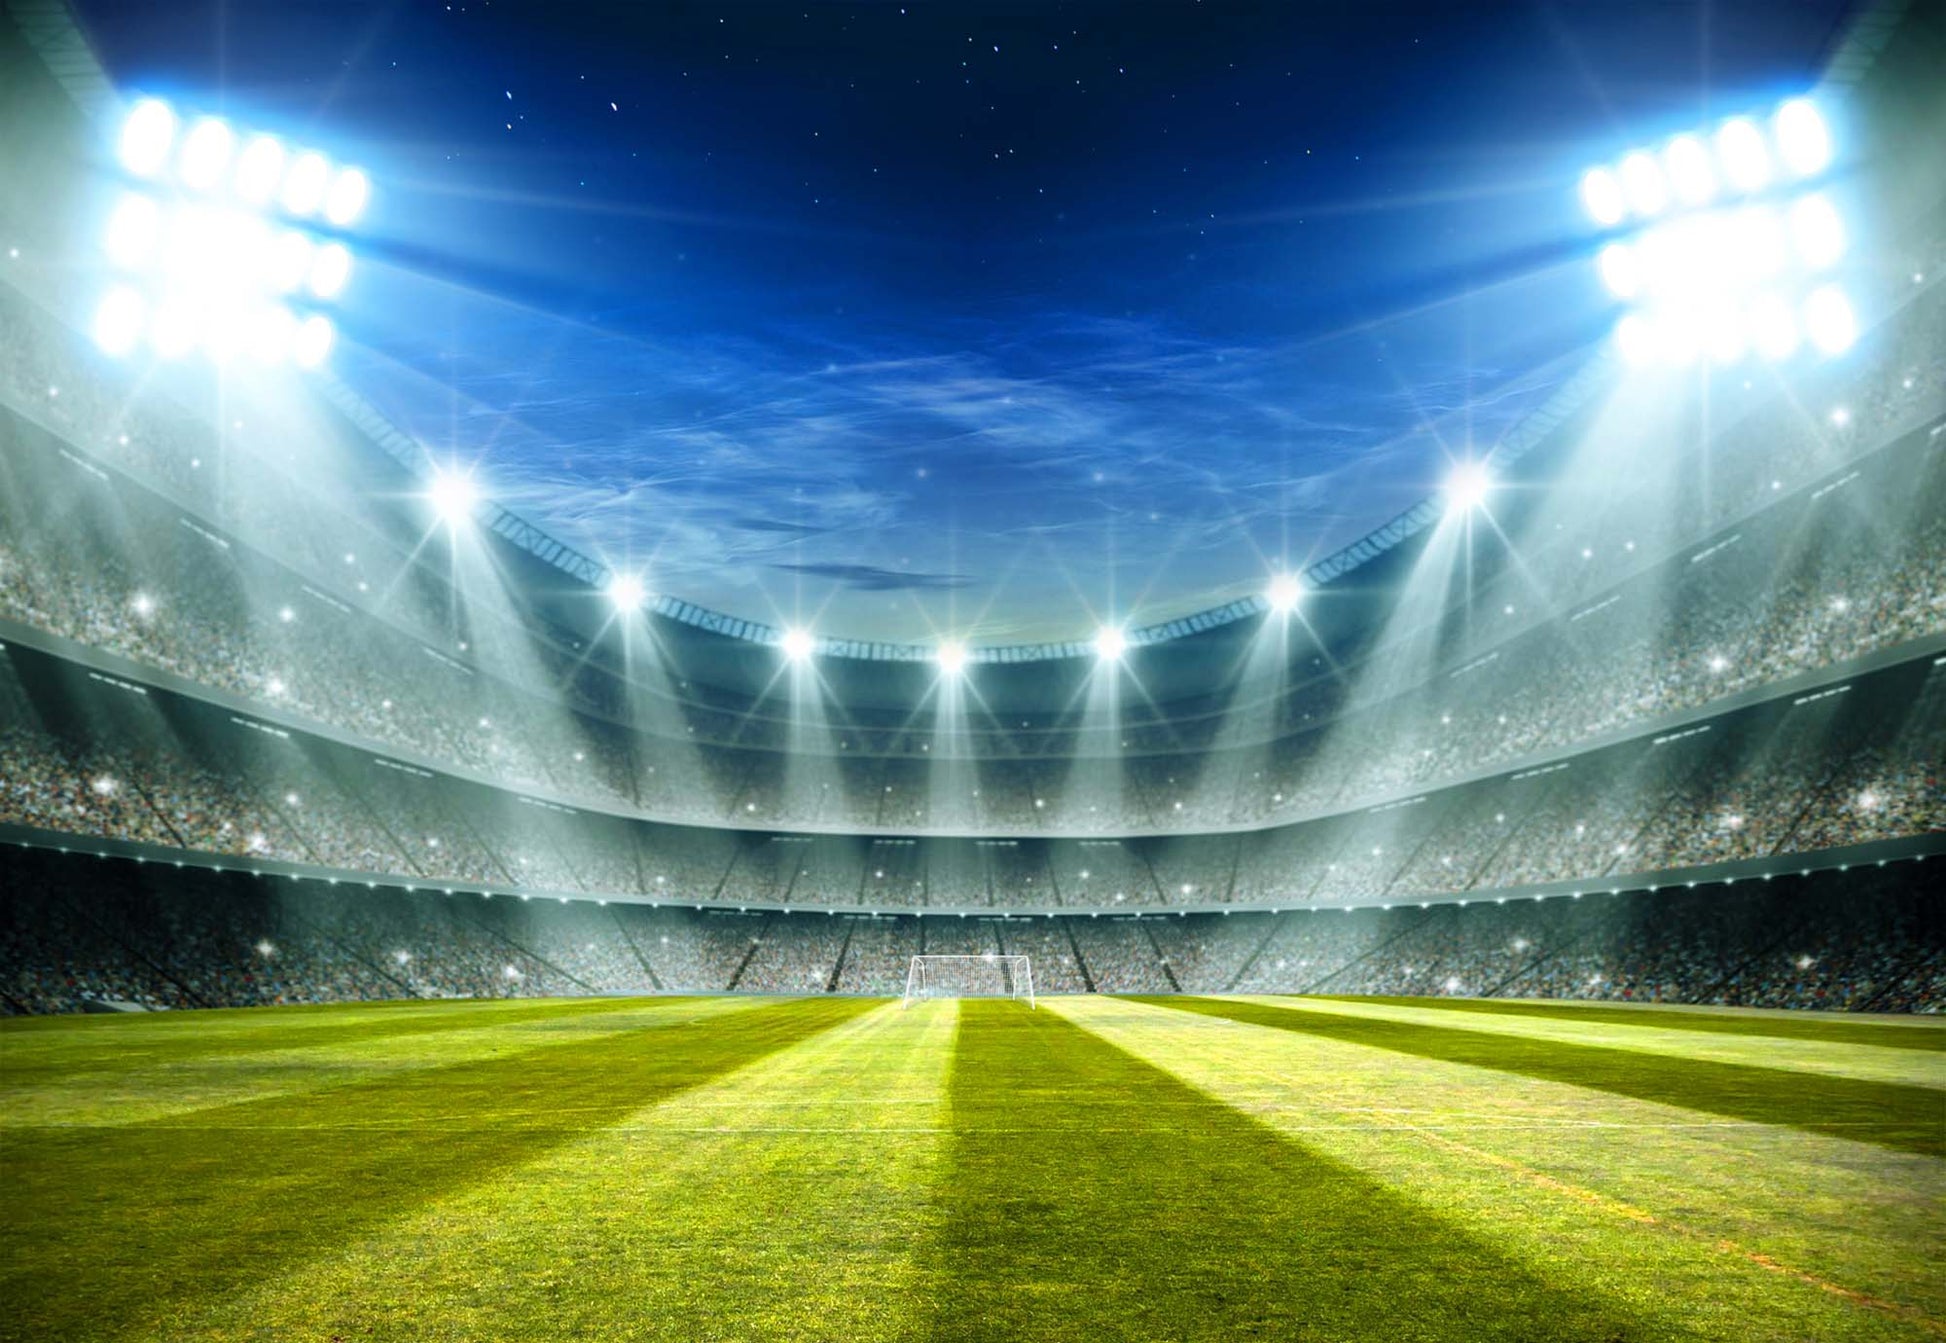 Stadium of Champions Wallpaper - USTAD HOME